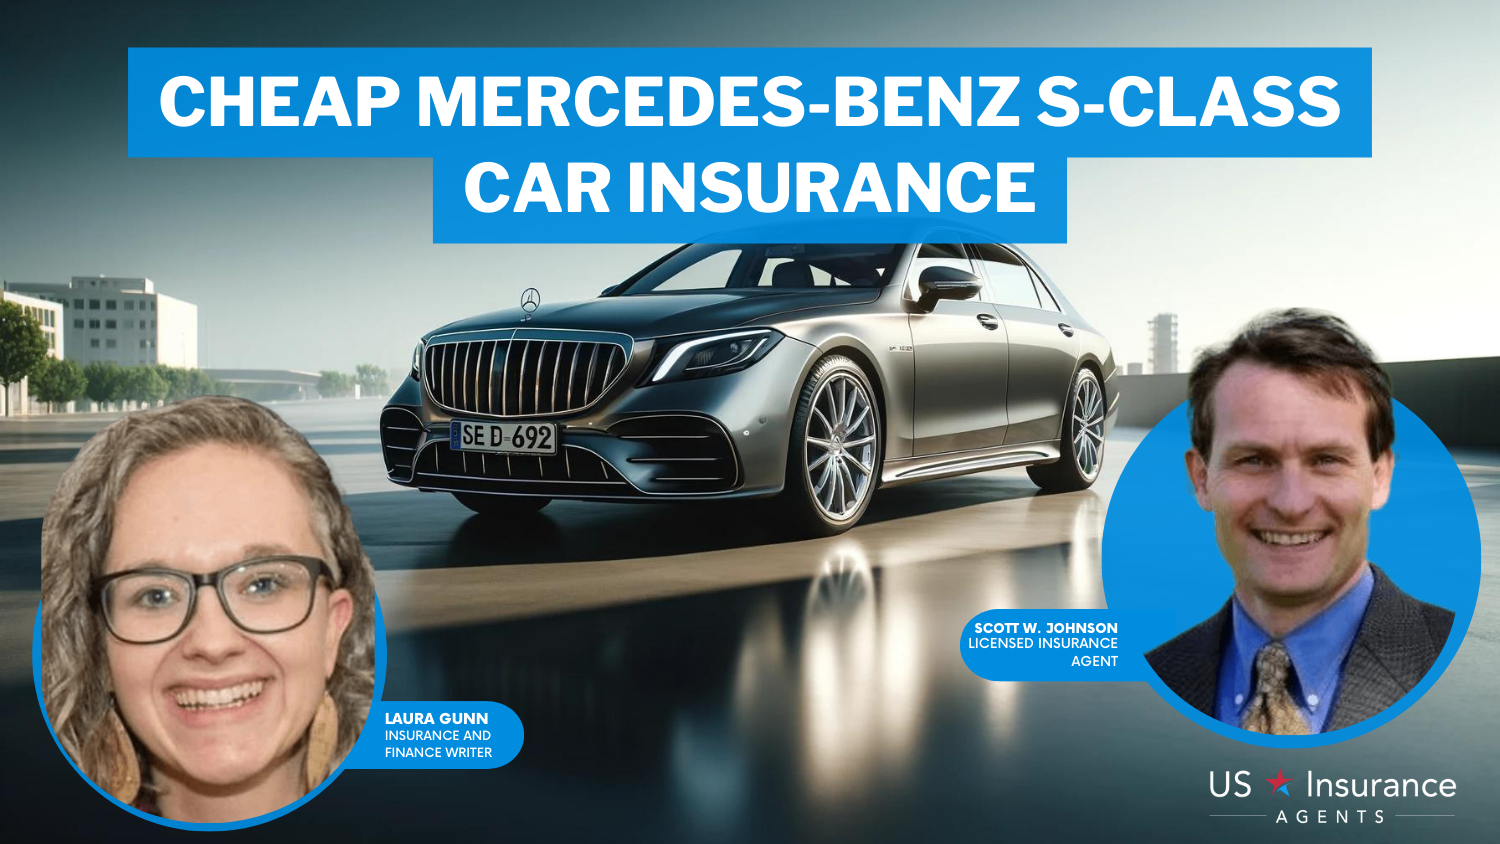 Cheap Mercedes-Benz S-Class Car Insurance: Safeco, Progressive, and AAA